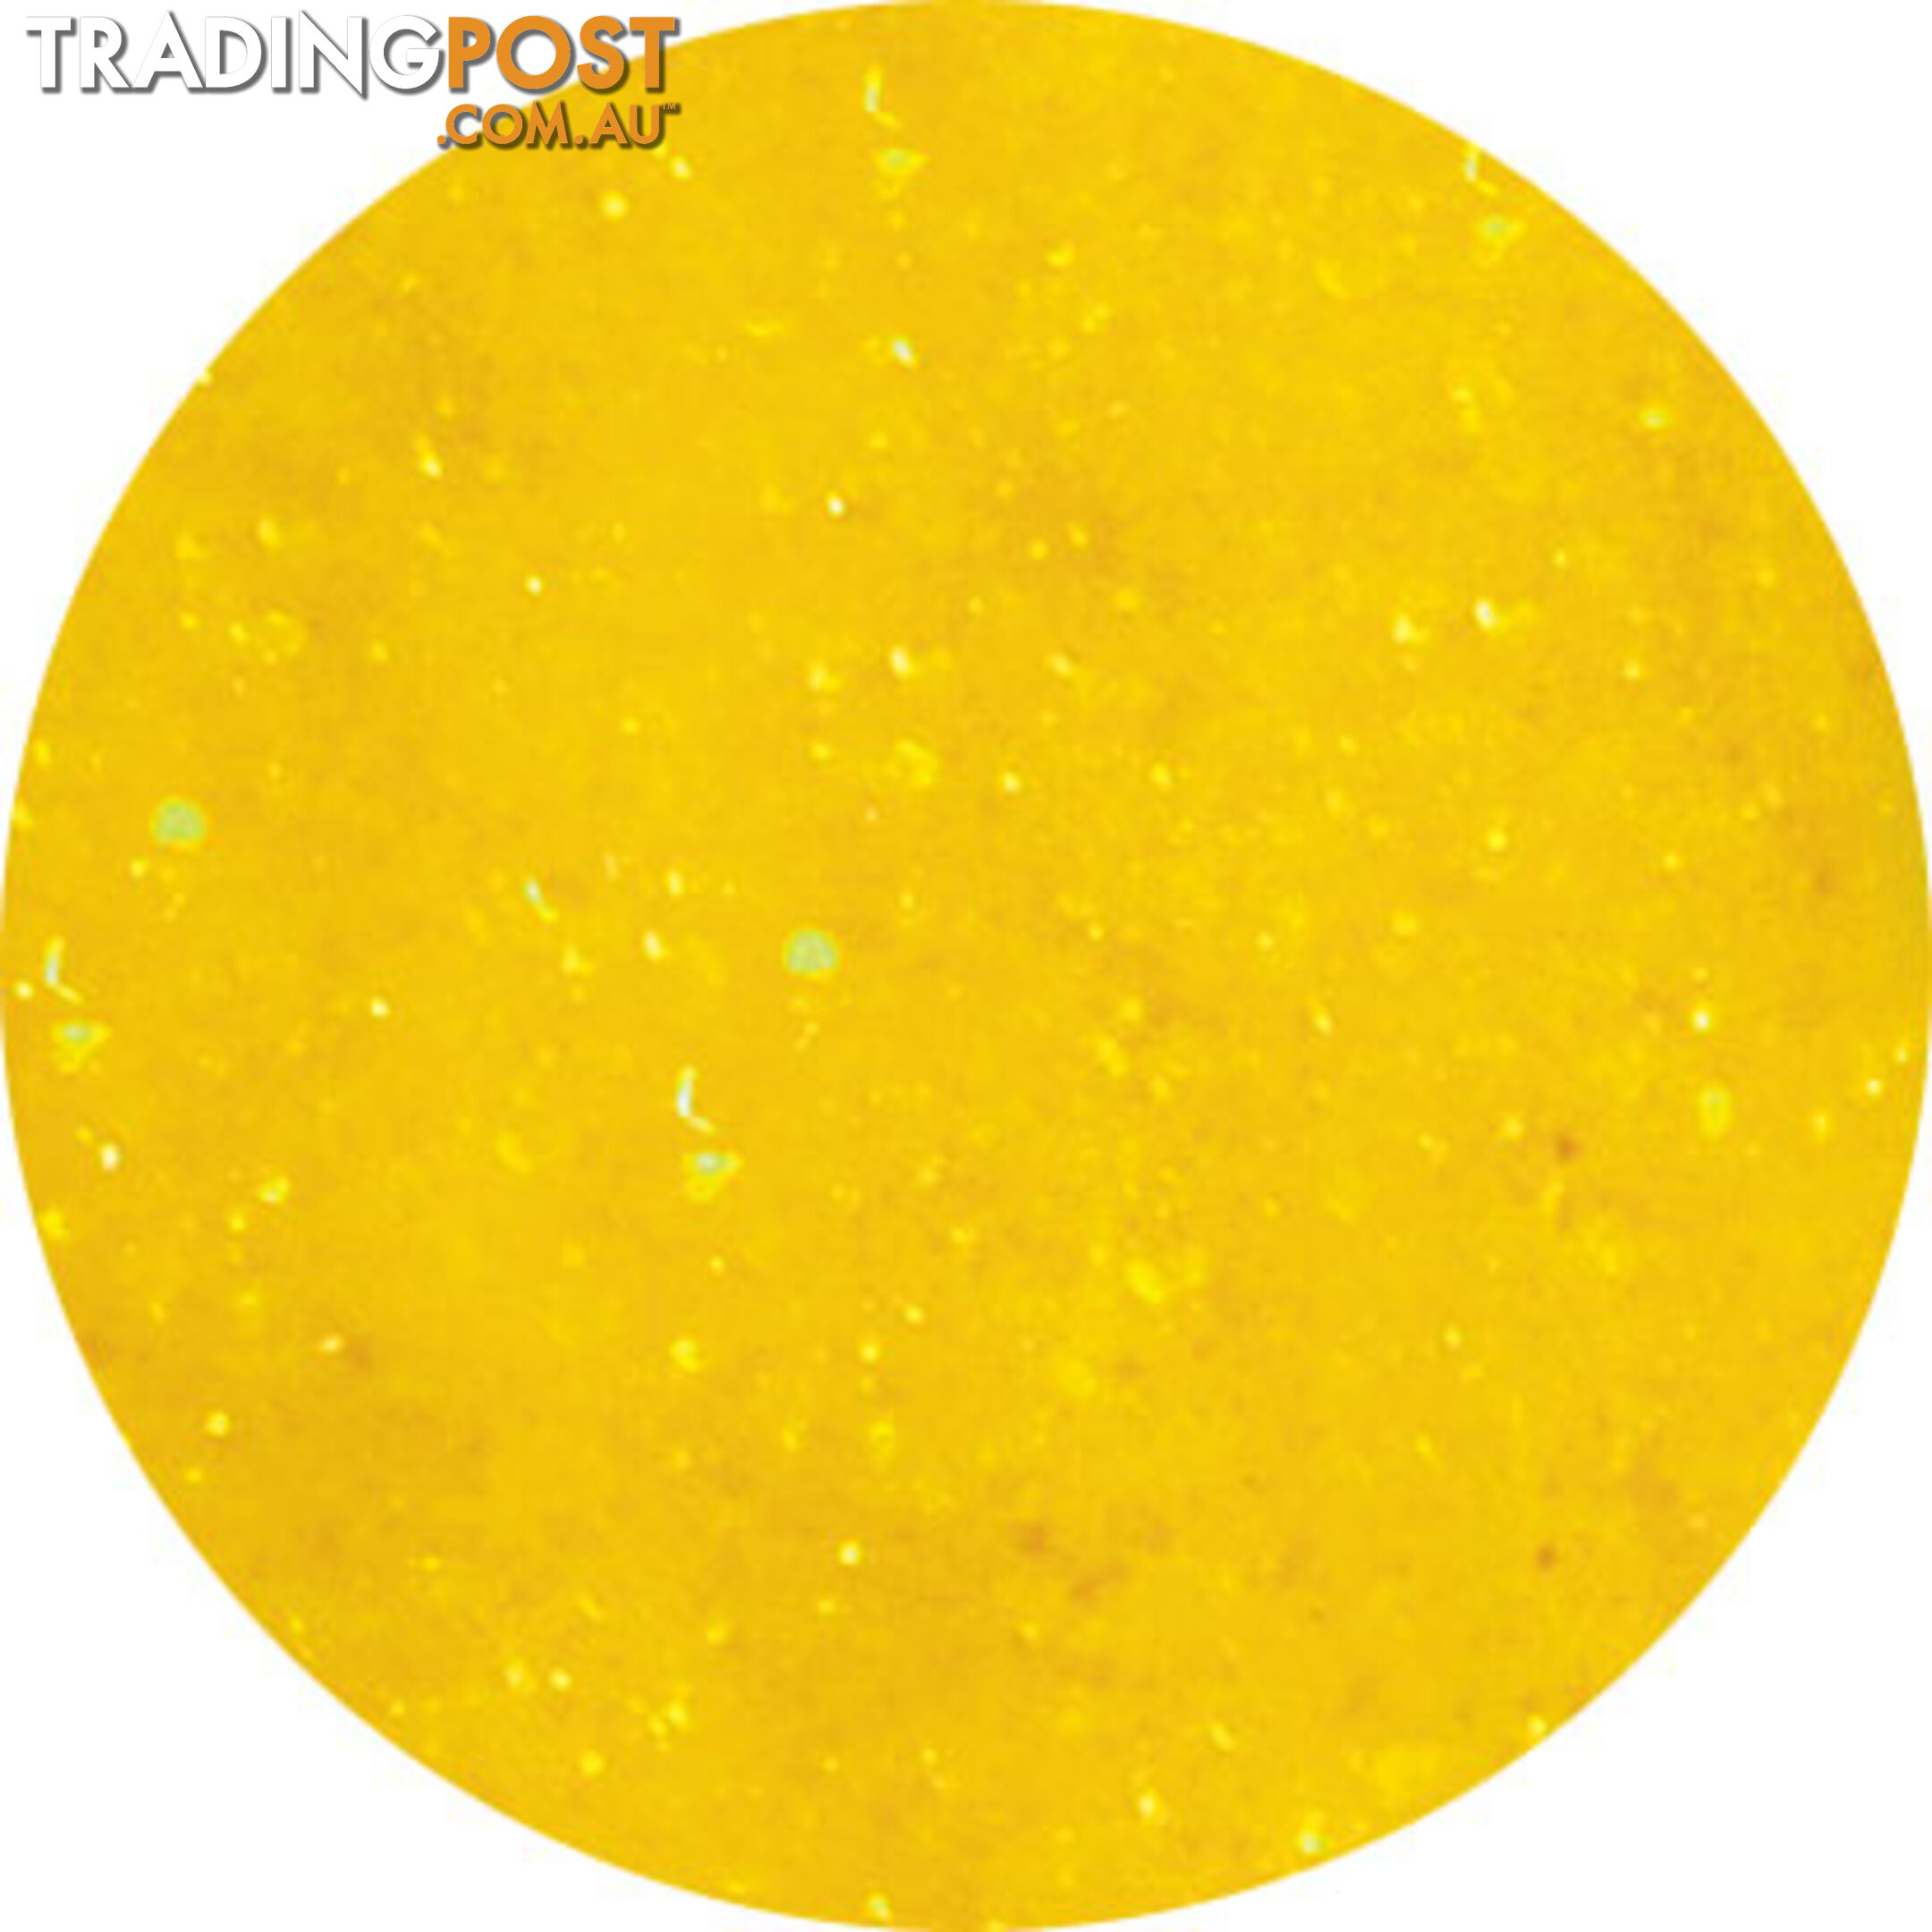 SNS SC13 Gelous Dipping Powder 28g (1oz) Yellow Sub - 635635724146